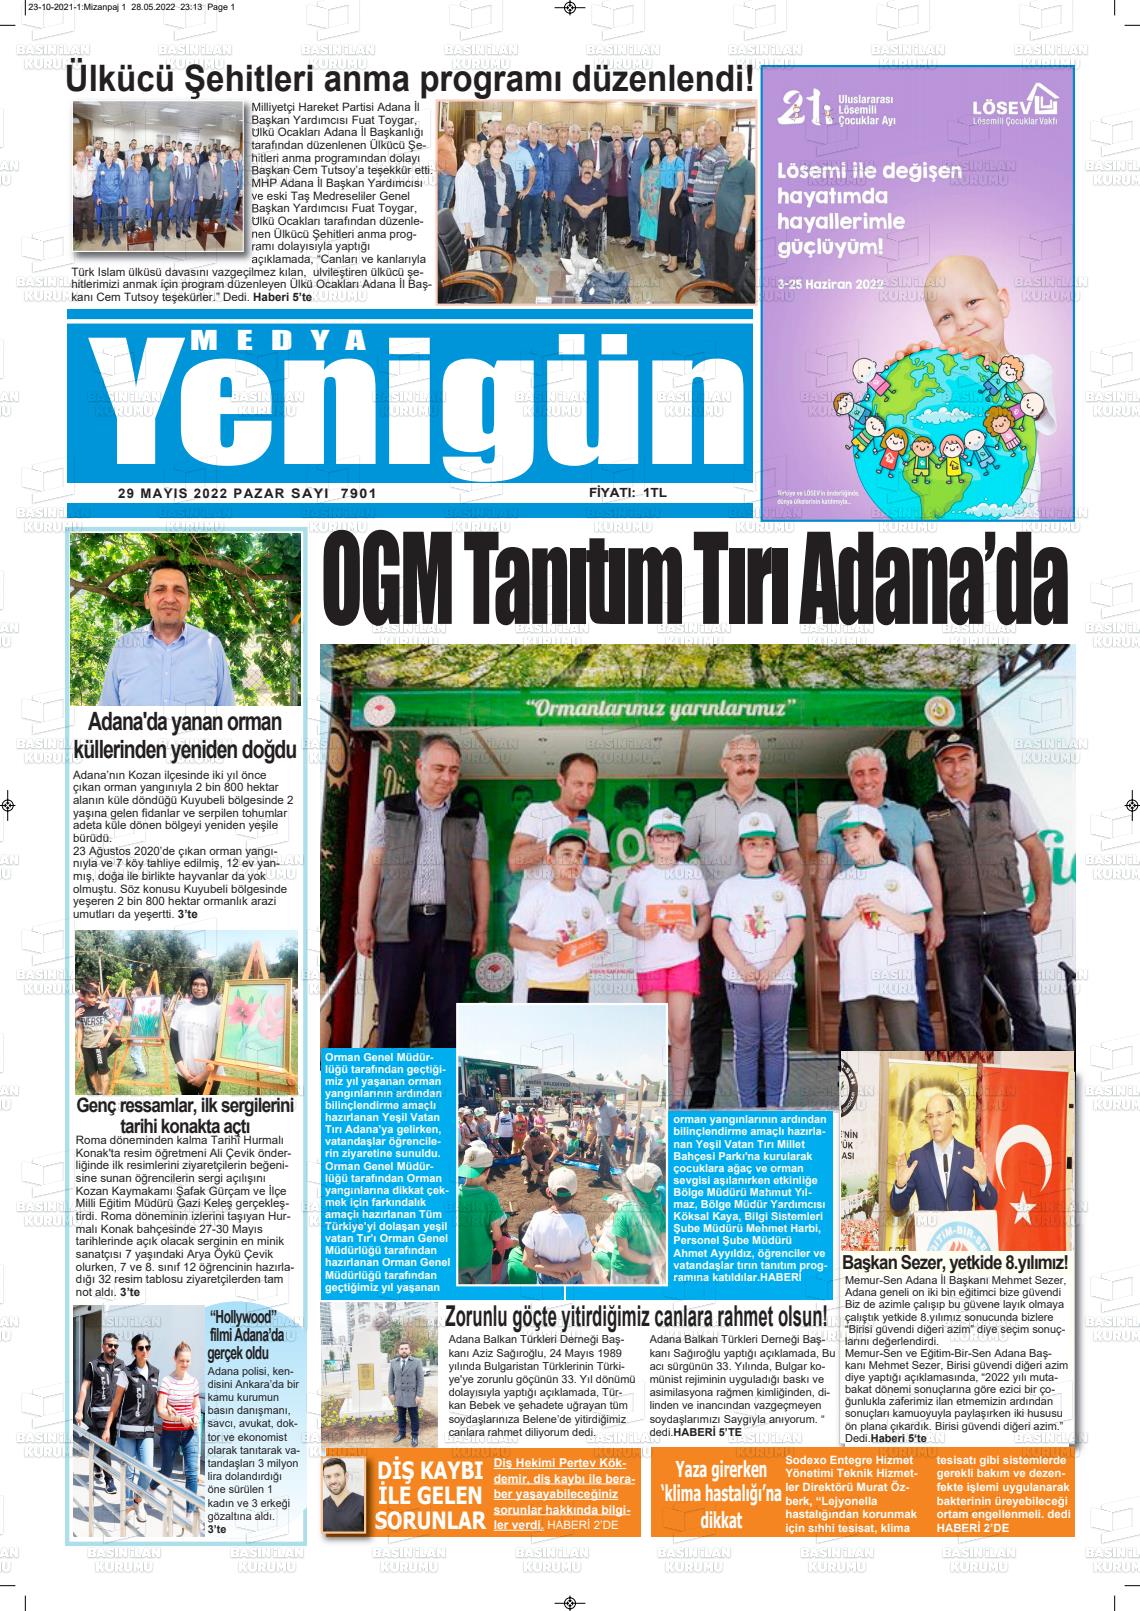 29 Mayıs 2022 Medya Yenigün Gazete Manşeti